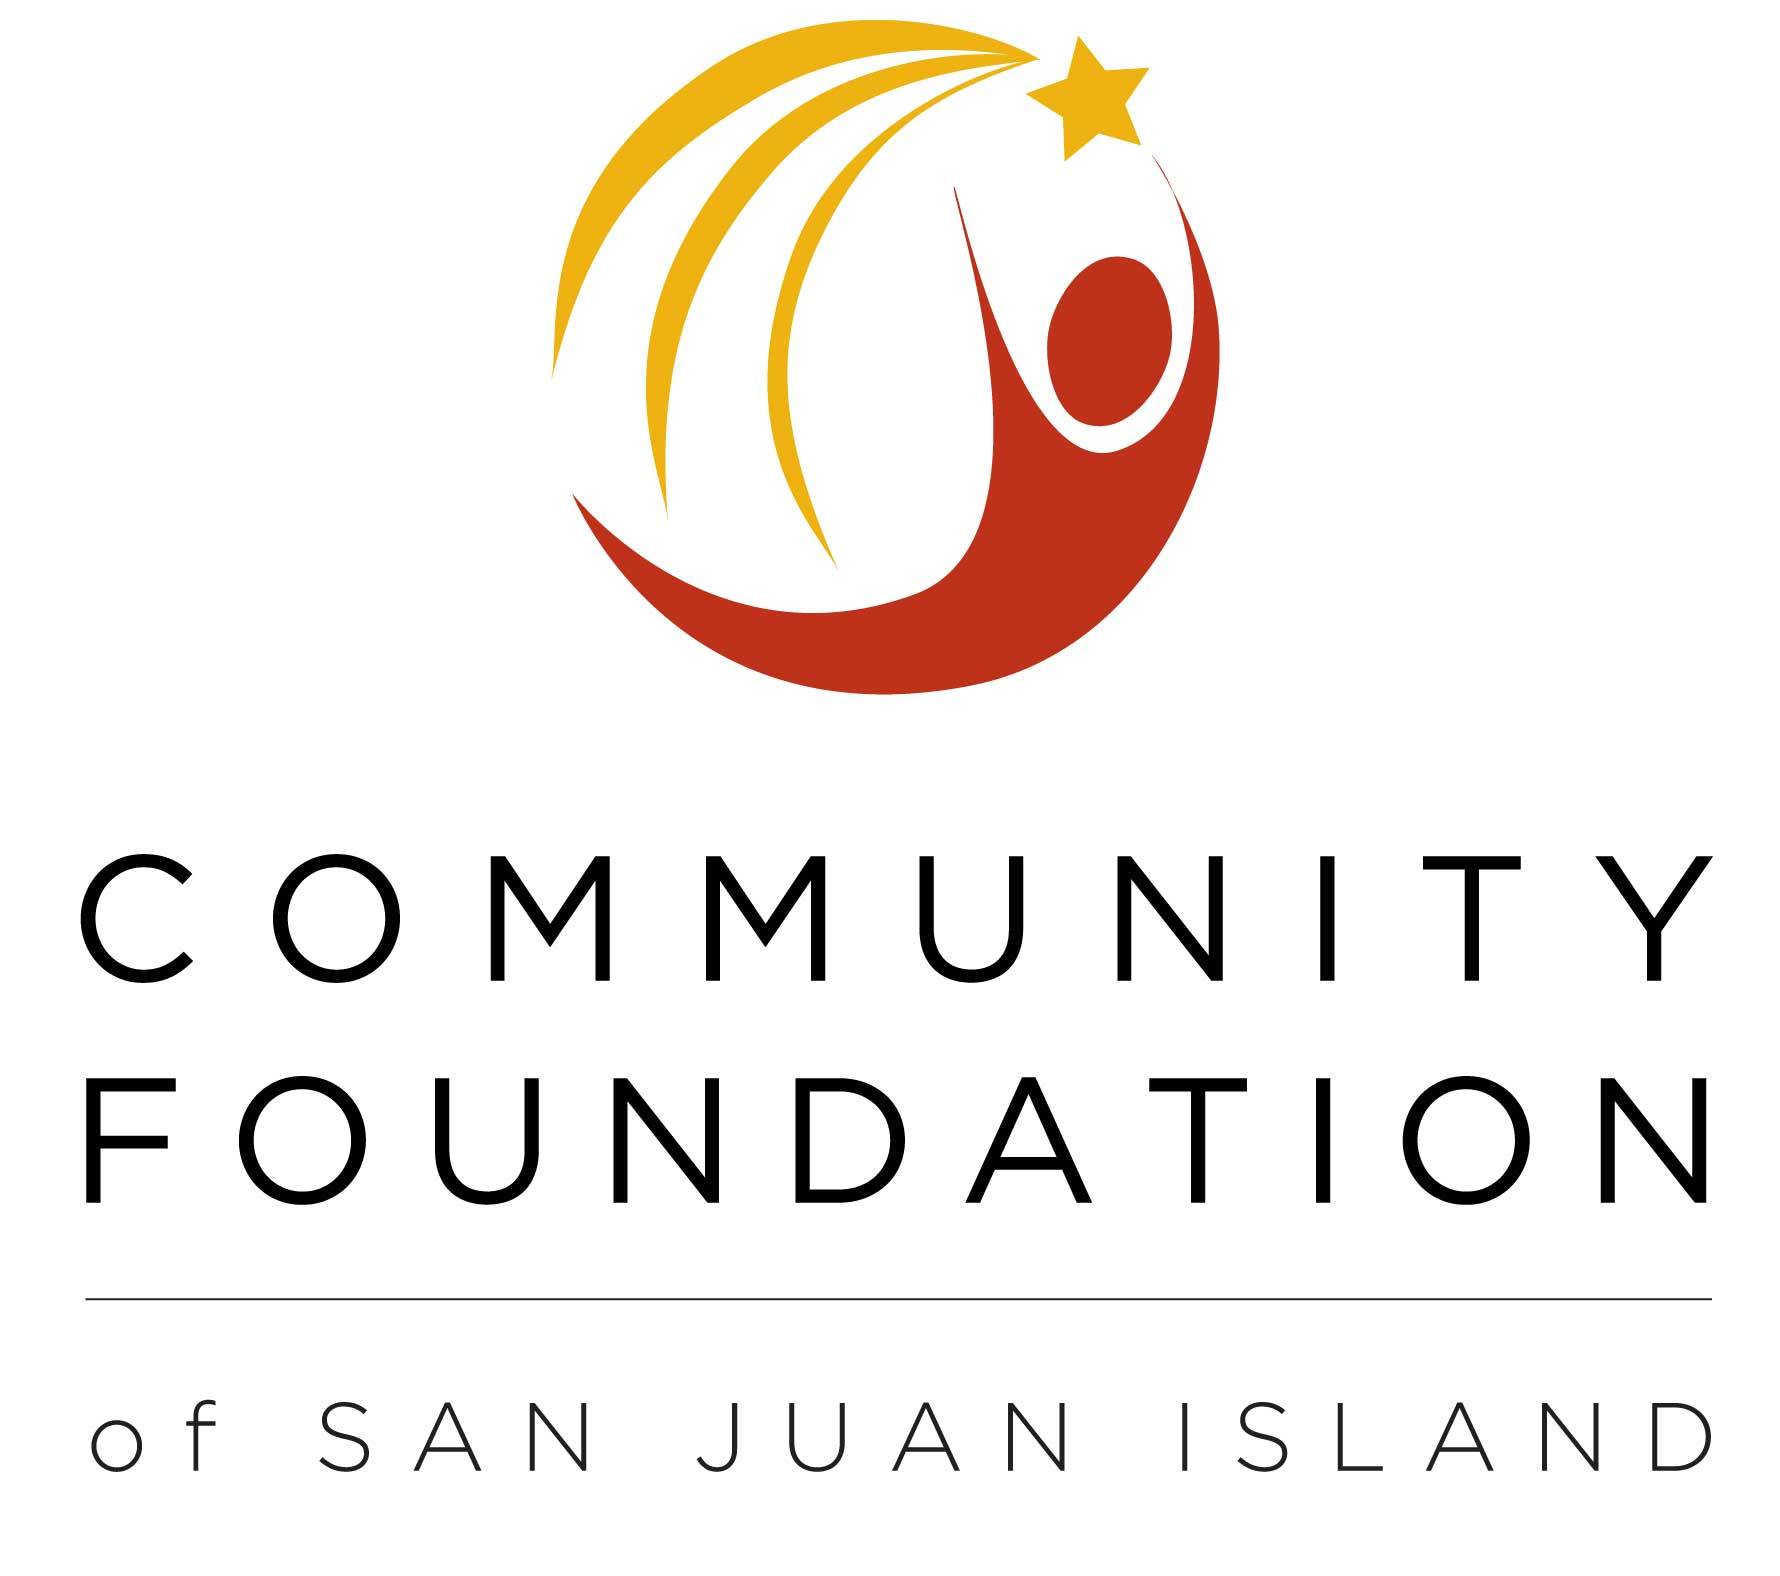 San Juan Island Women’s fund awards $6,000 to local nonprofits